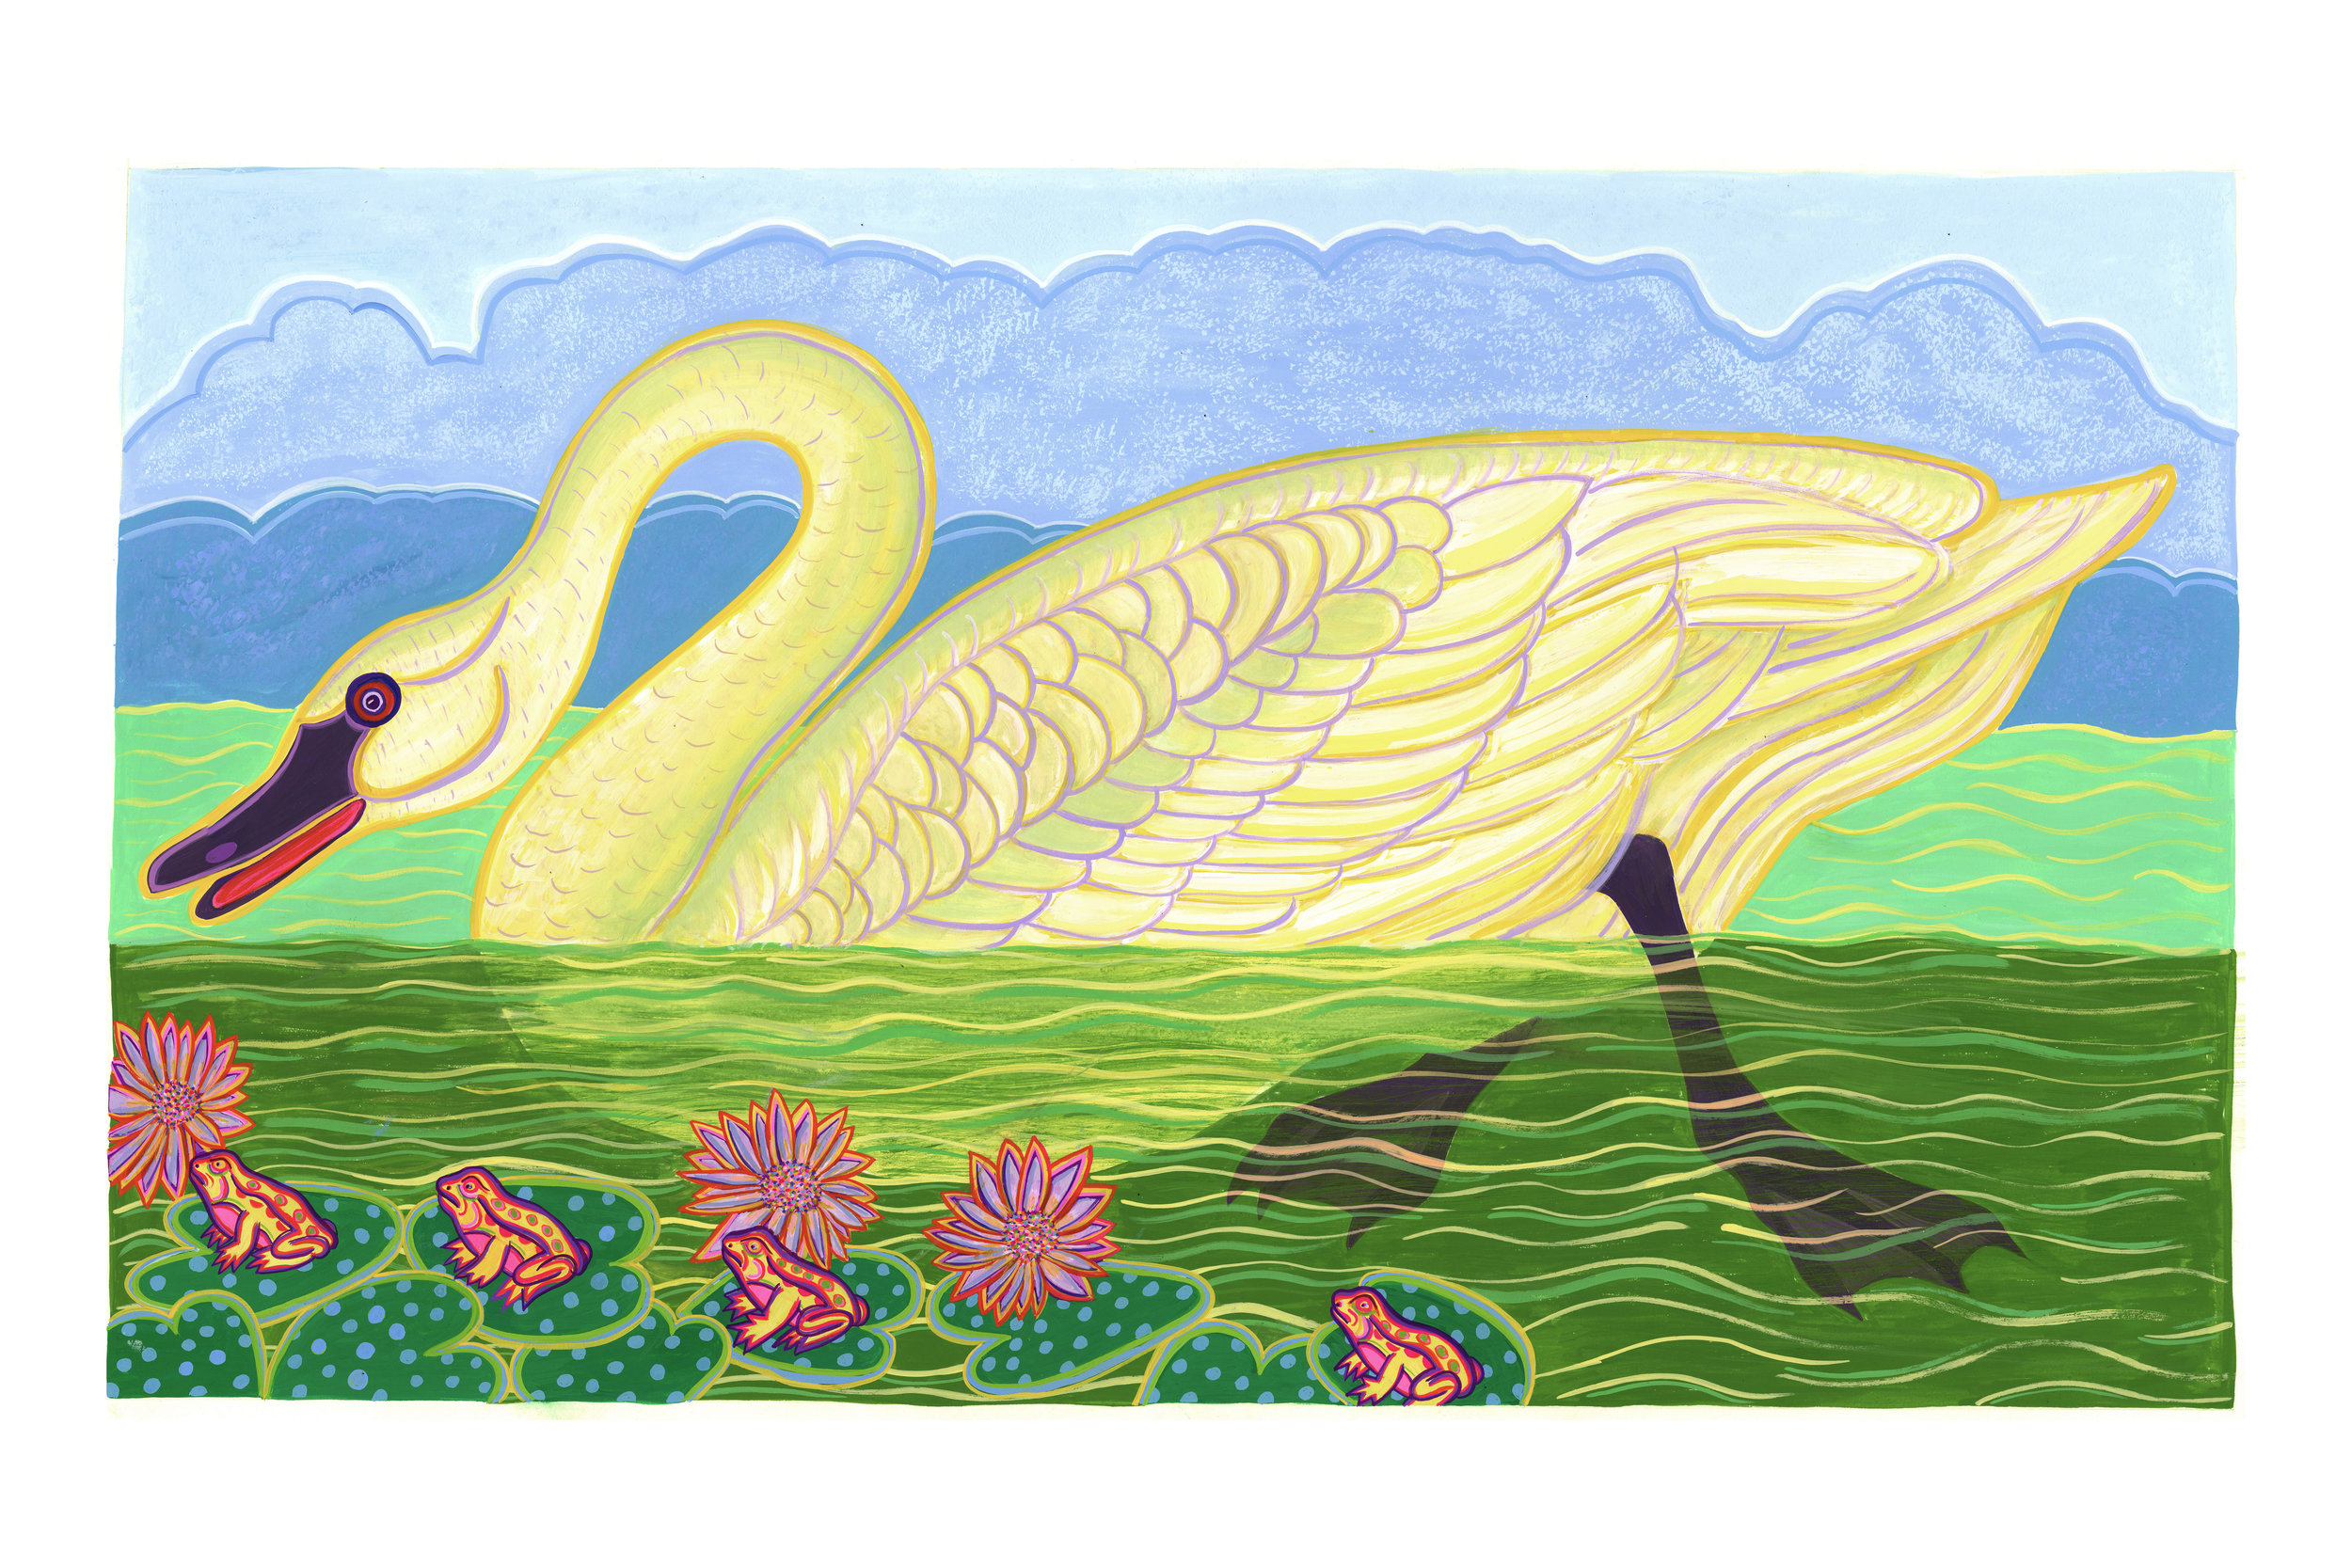 Beyond Audubon, American Swan